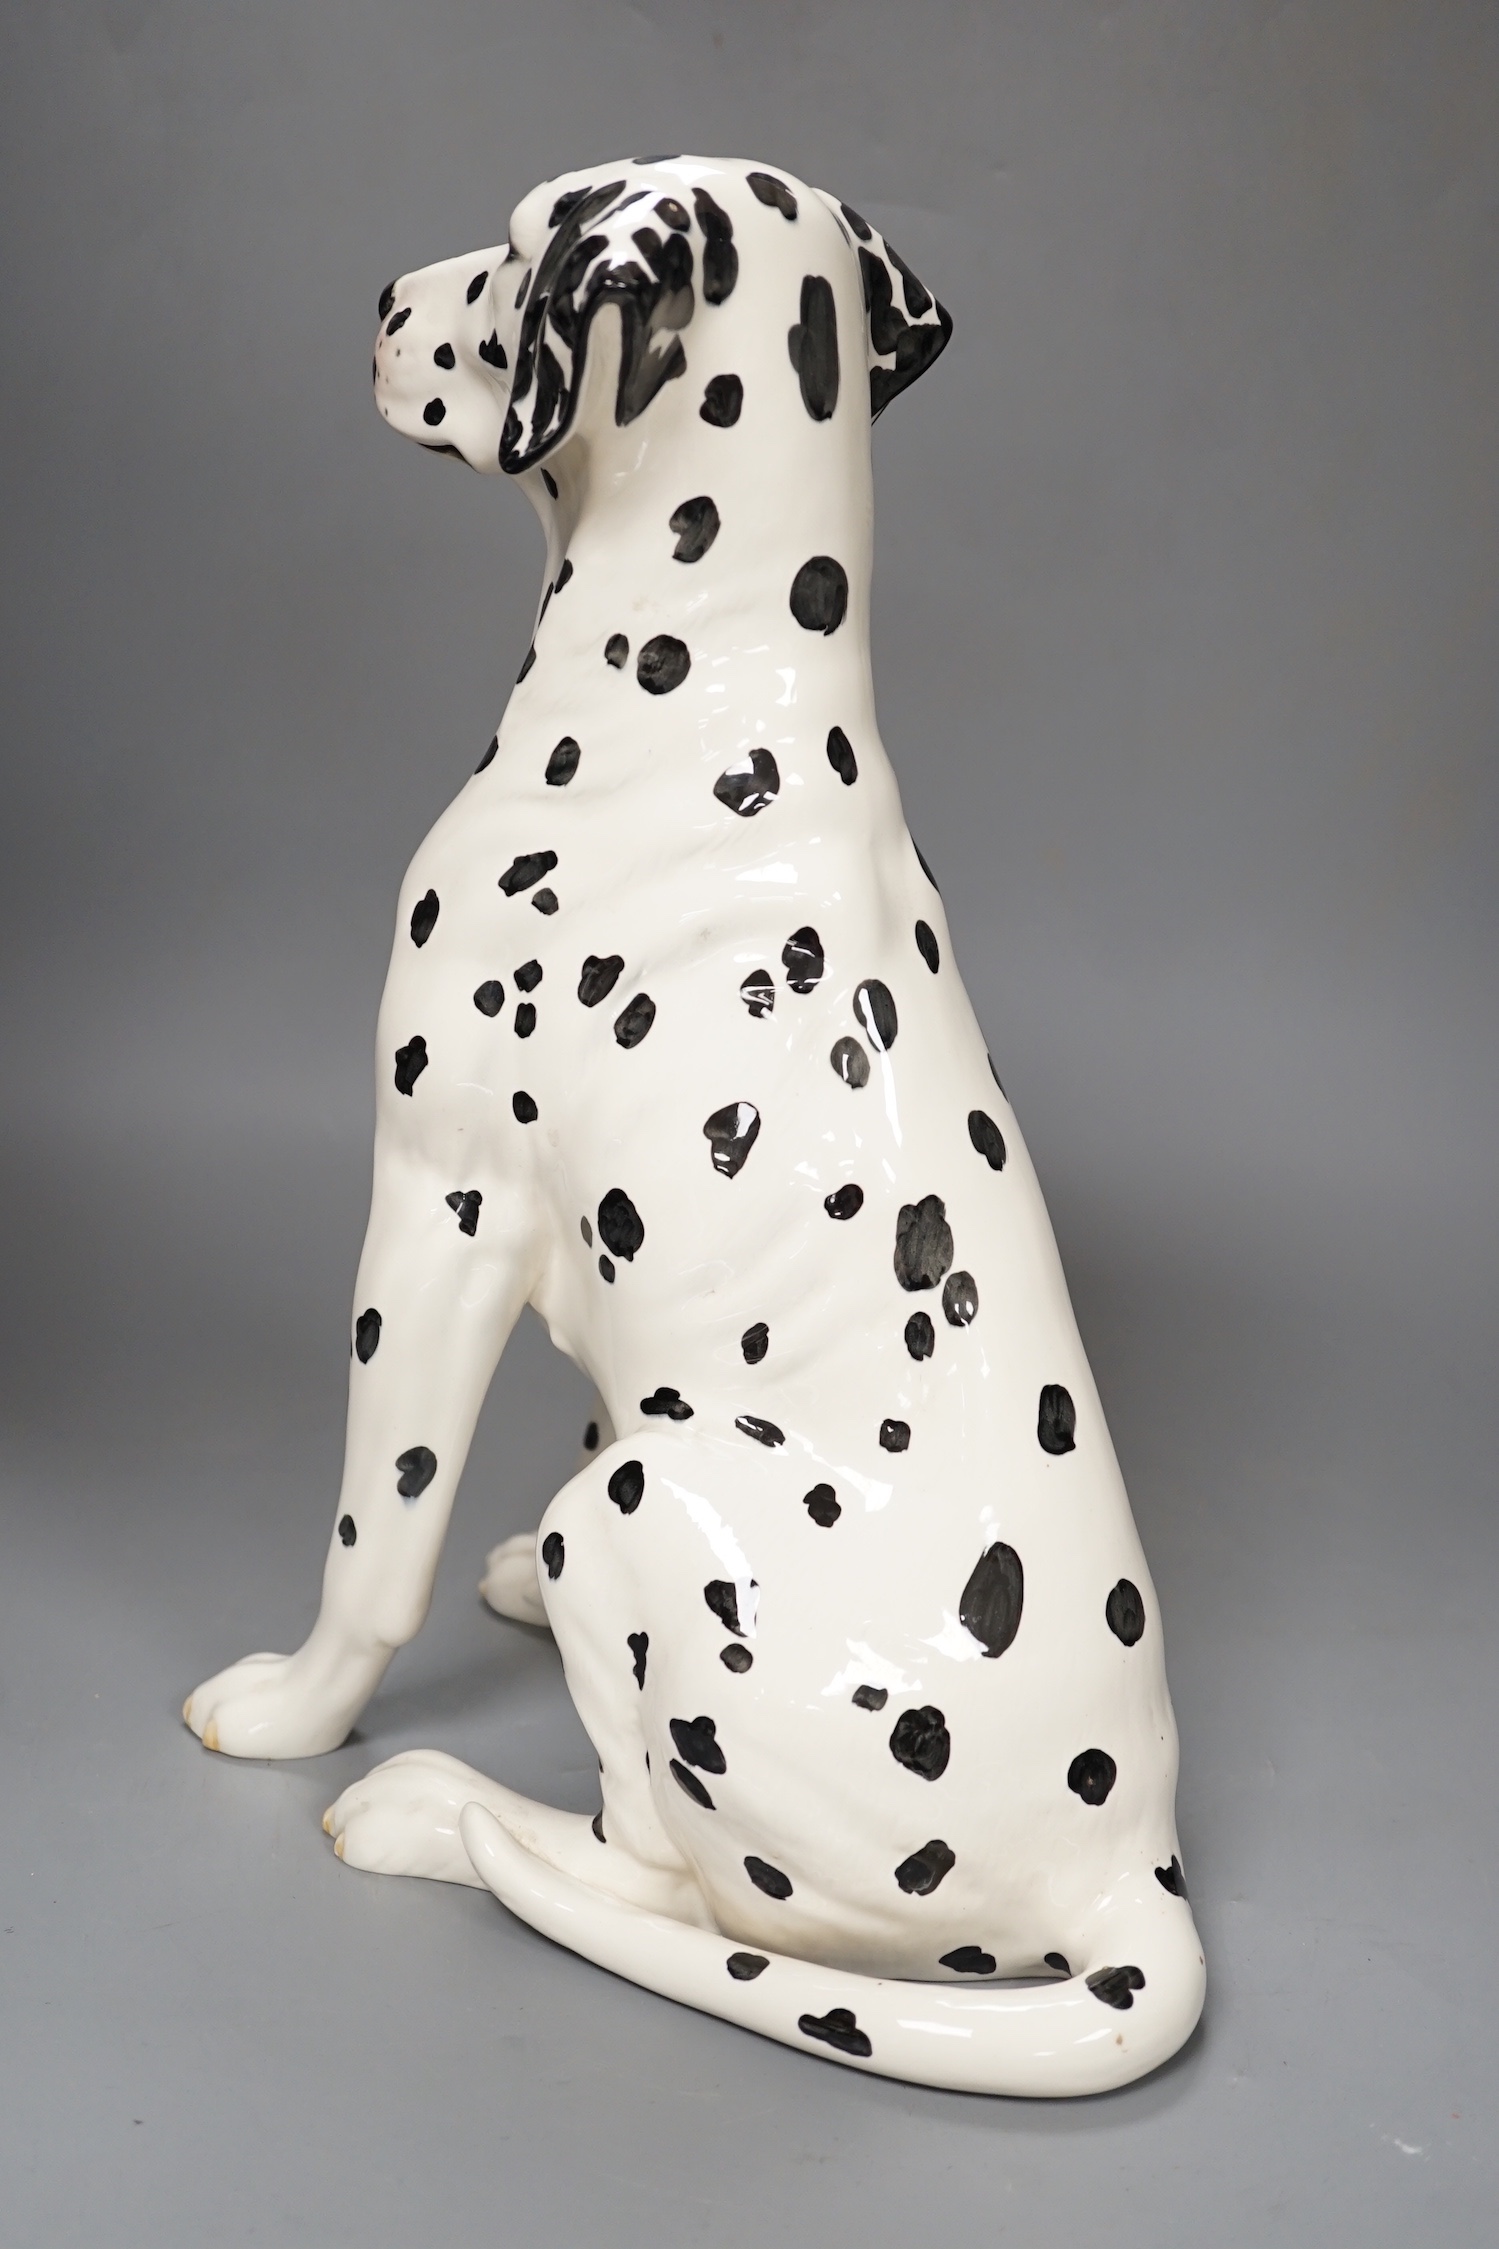 A large Beswick figure of a Dalmatian - 35cm high